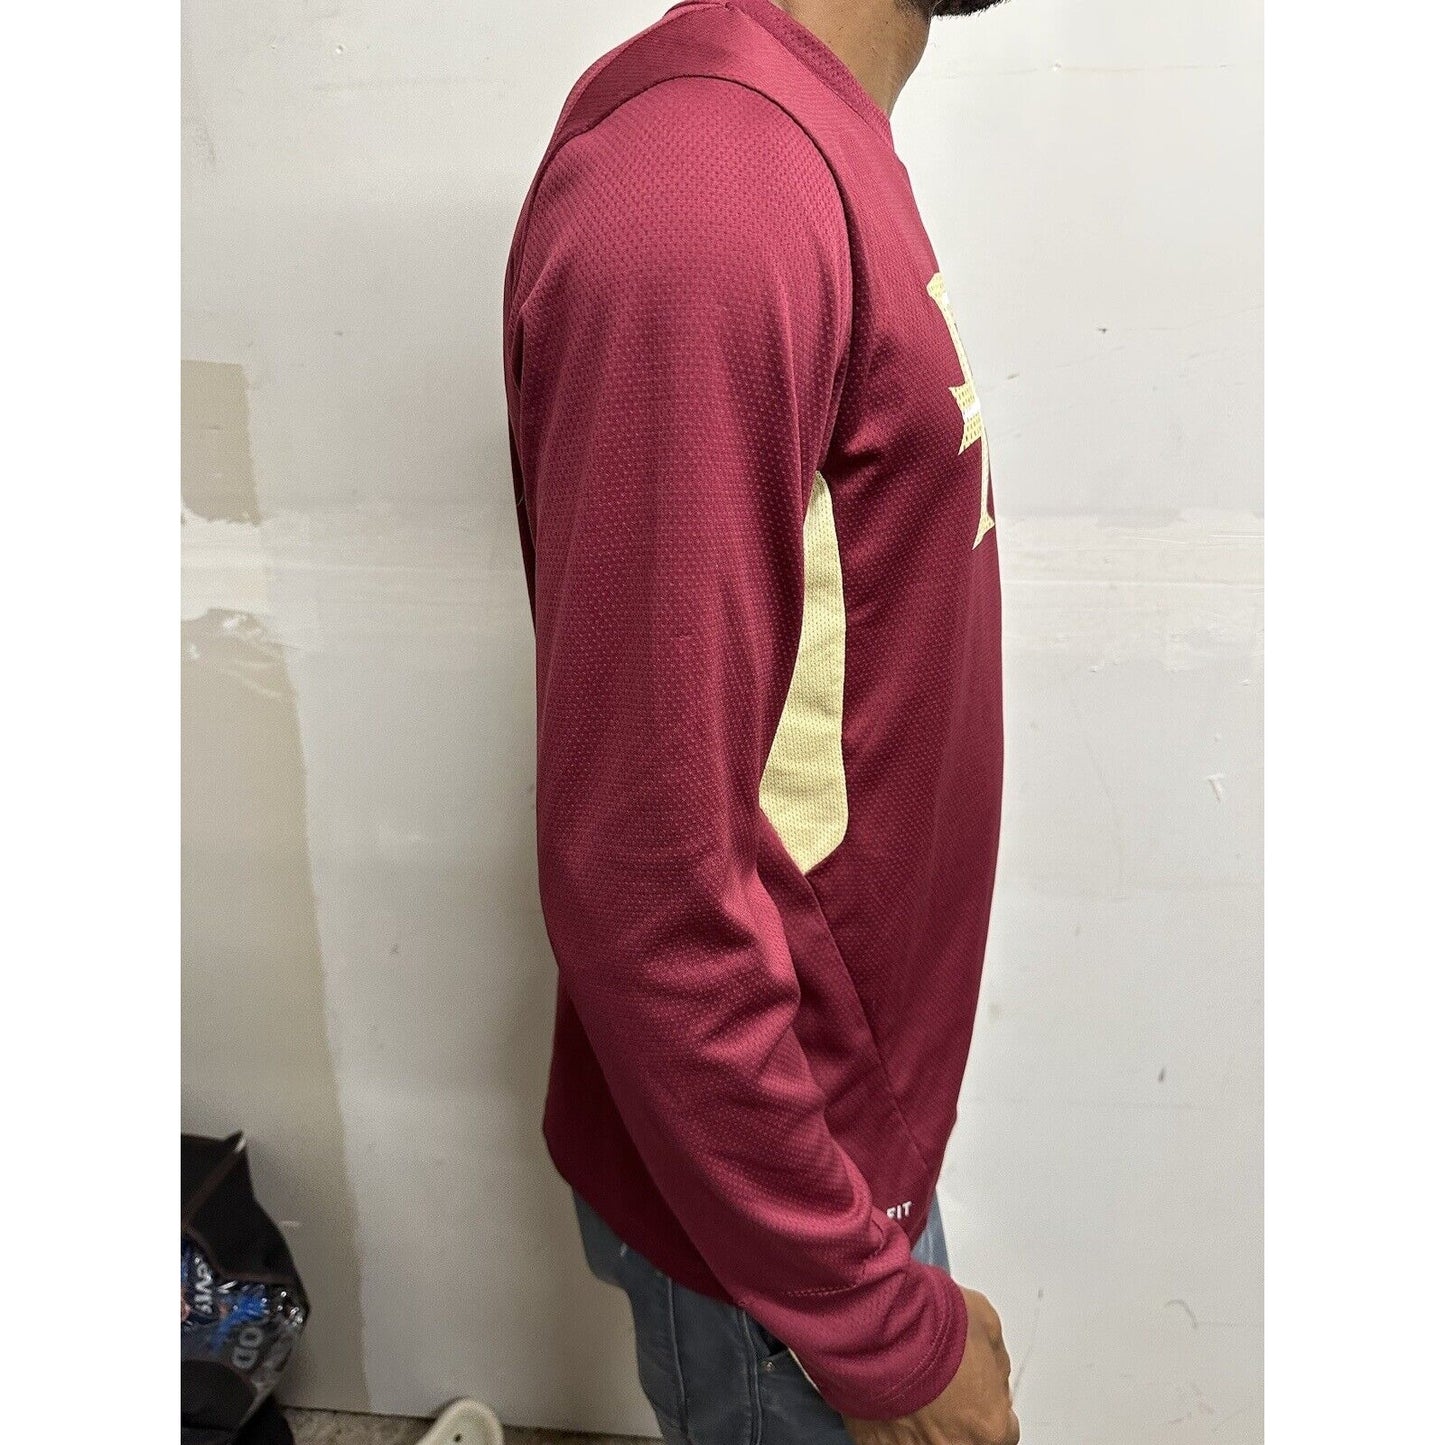 Men’s Nike Medium Florida State University Seminoles Red Long Sleeve Shirt